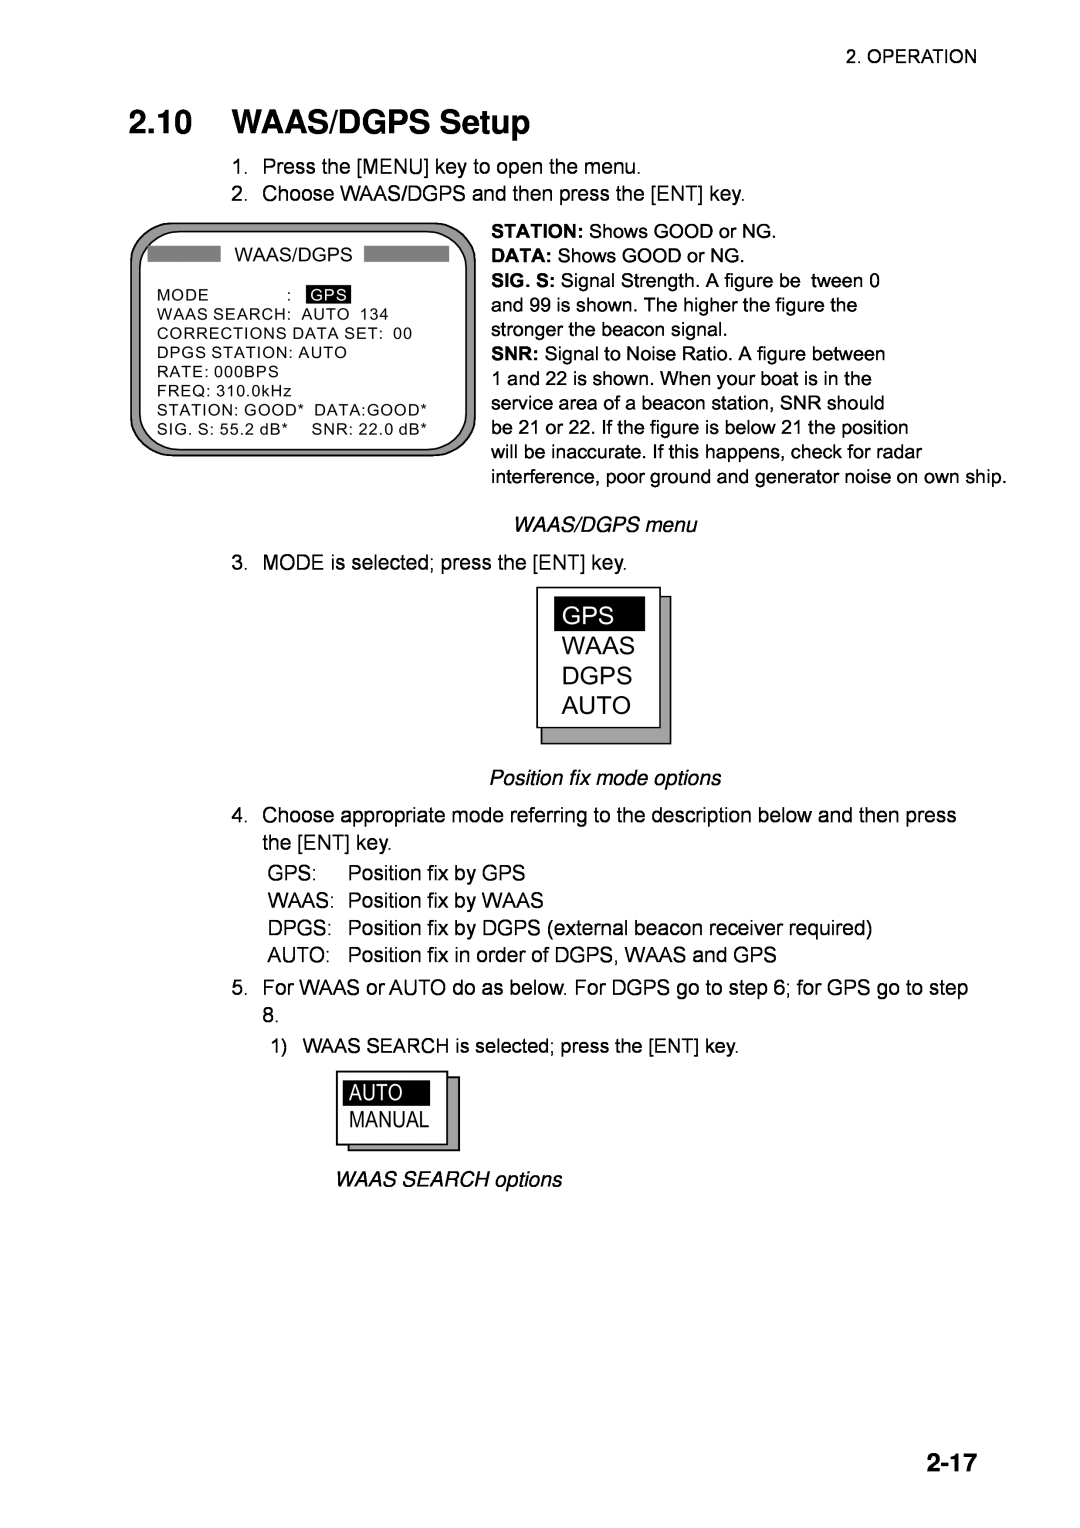 Furuno SC-110 manual 2.10WAAS/DGPS Setup, 2-17, Waas Dgps Auto, Manual, WAAS/DGPS menu, Position fix mode options 